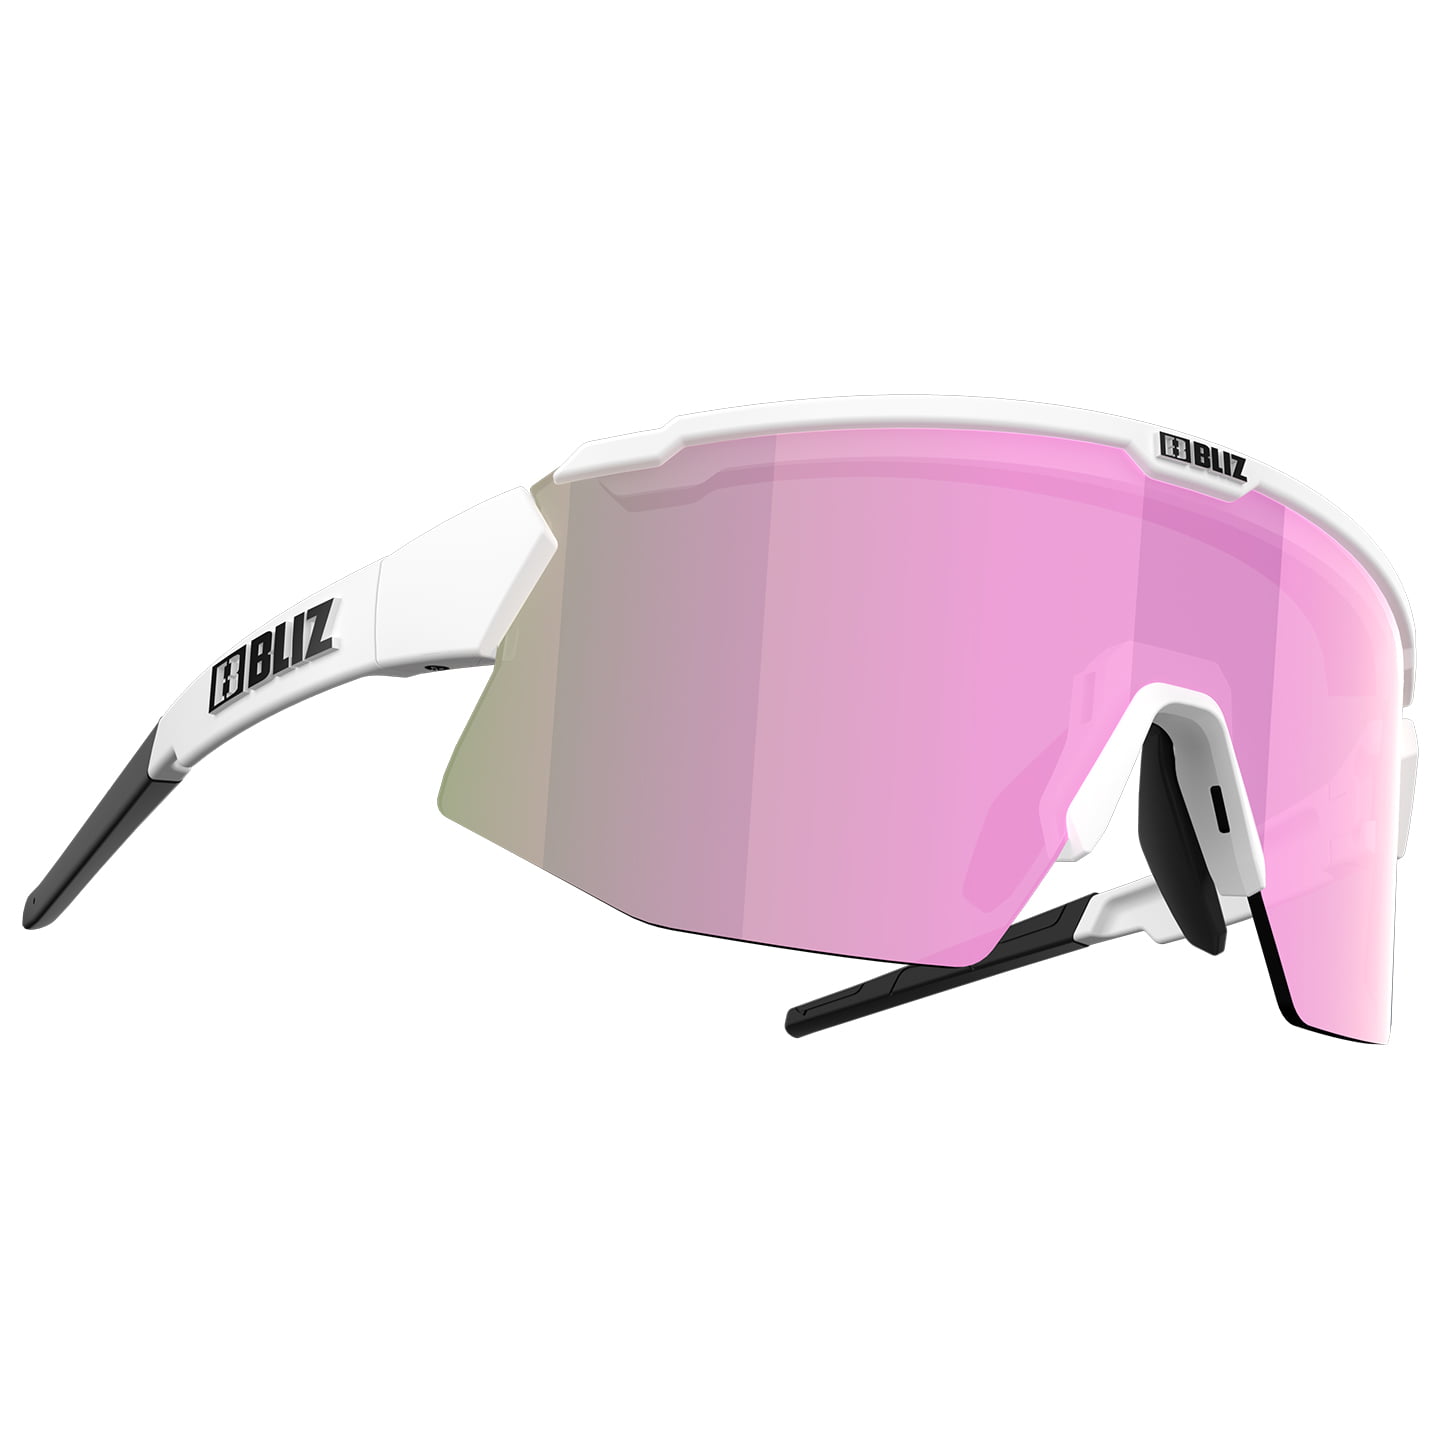 BLIZ Breeze 2023 Eyewear Set, Unisex (women / men), Cycle glasses, Road bike accessories